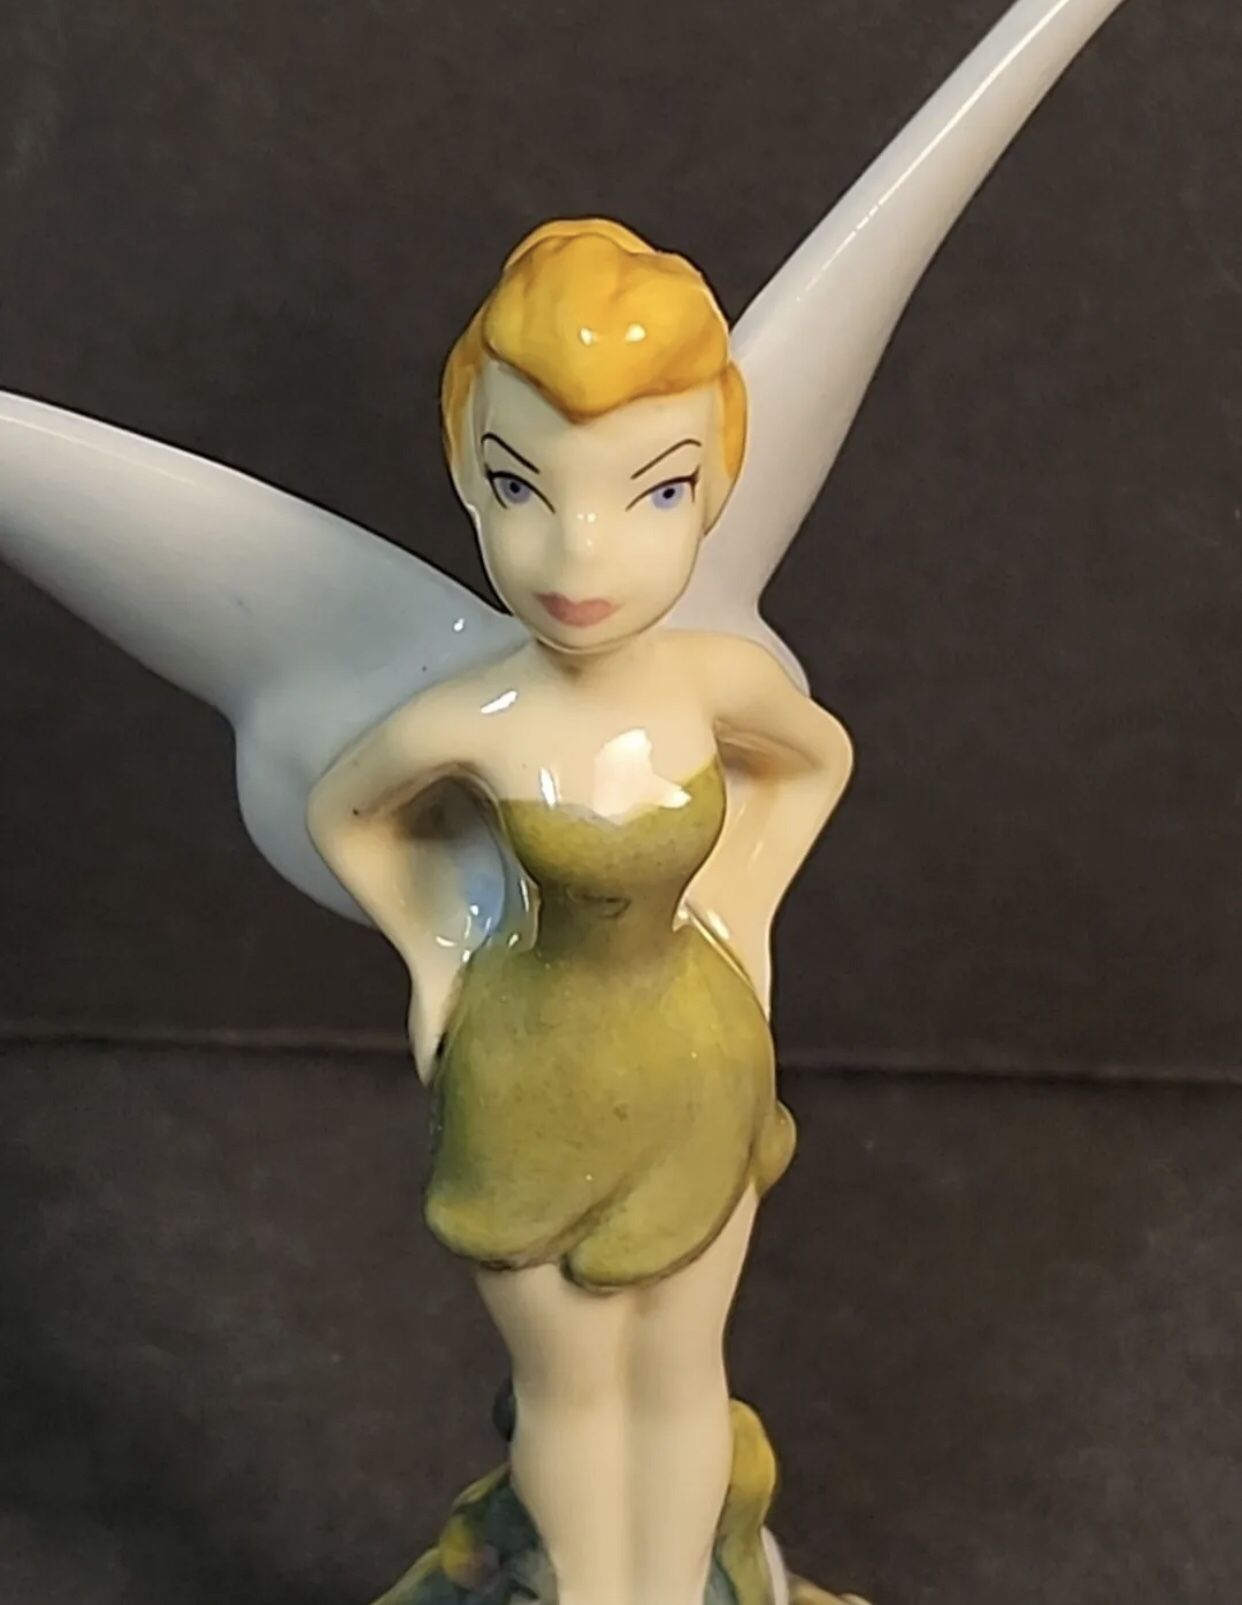 Disney Royal Doulton Fairies Tinker Bell Miniature Ceramic Figurine 